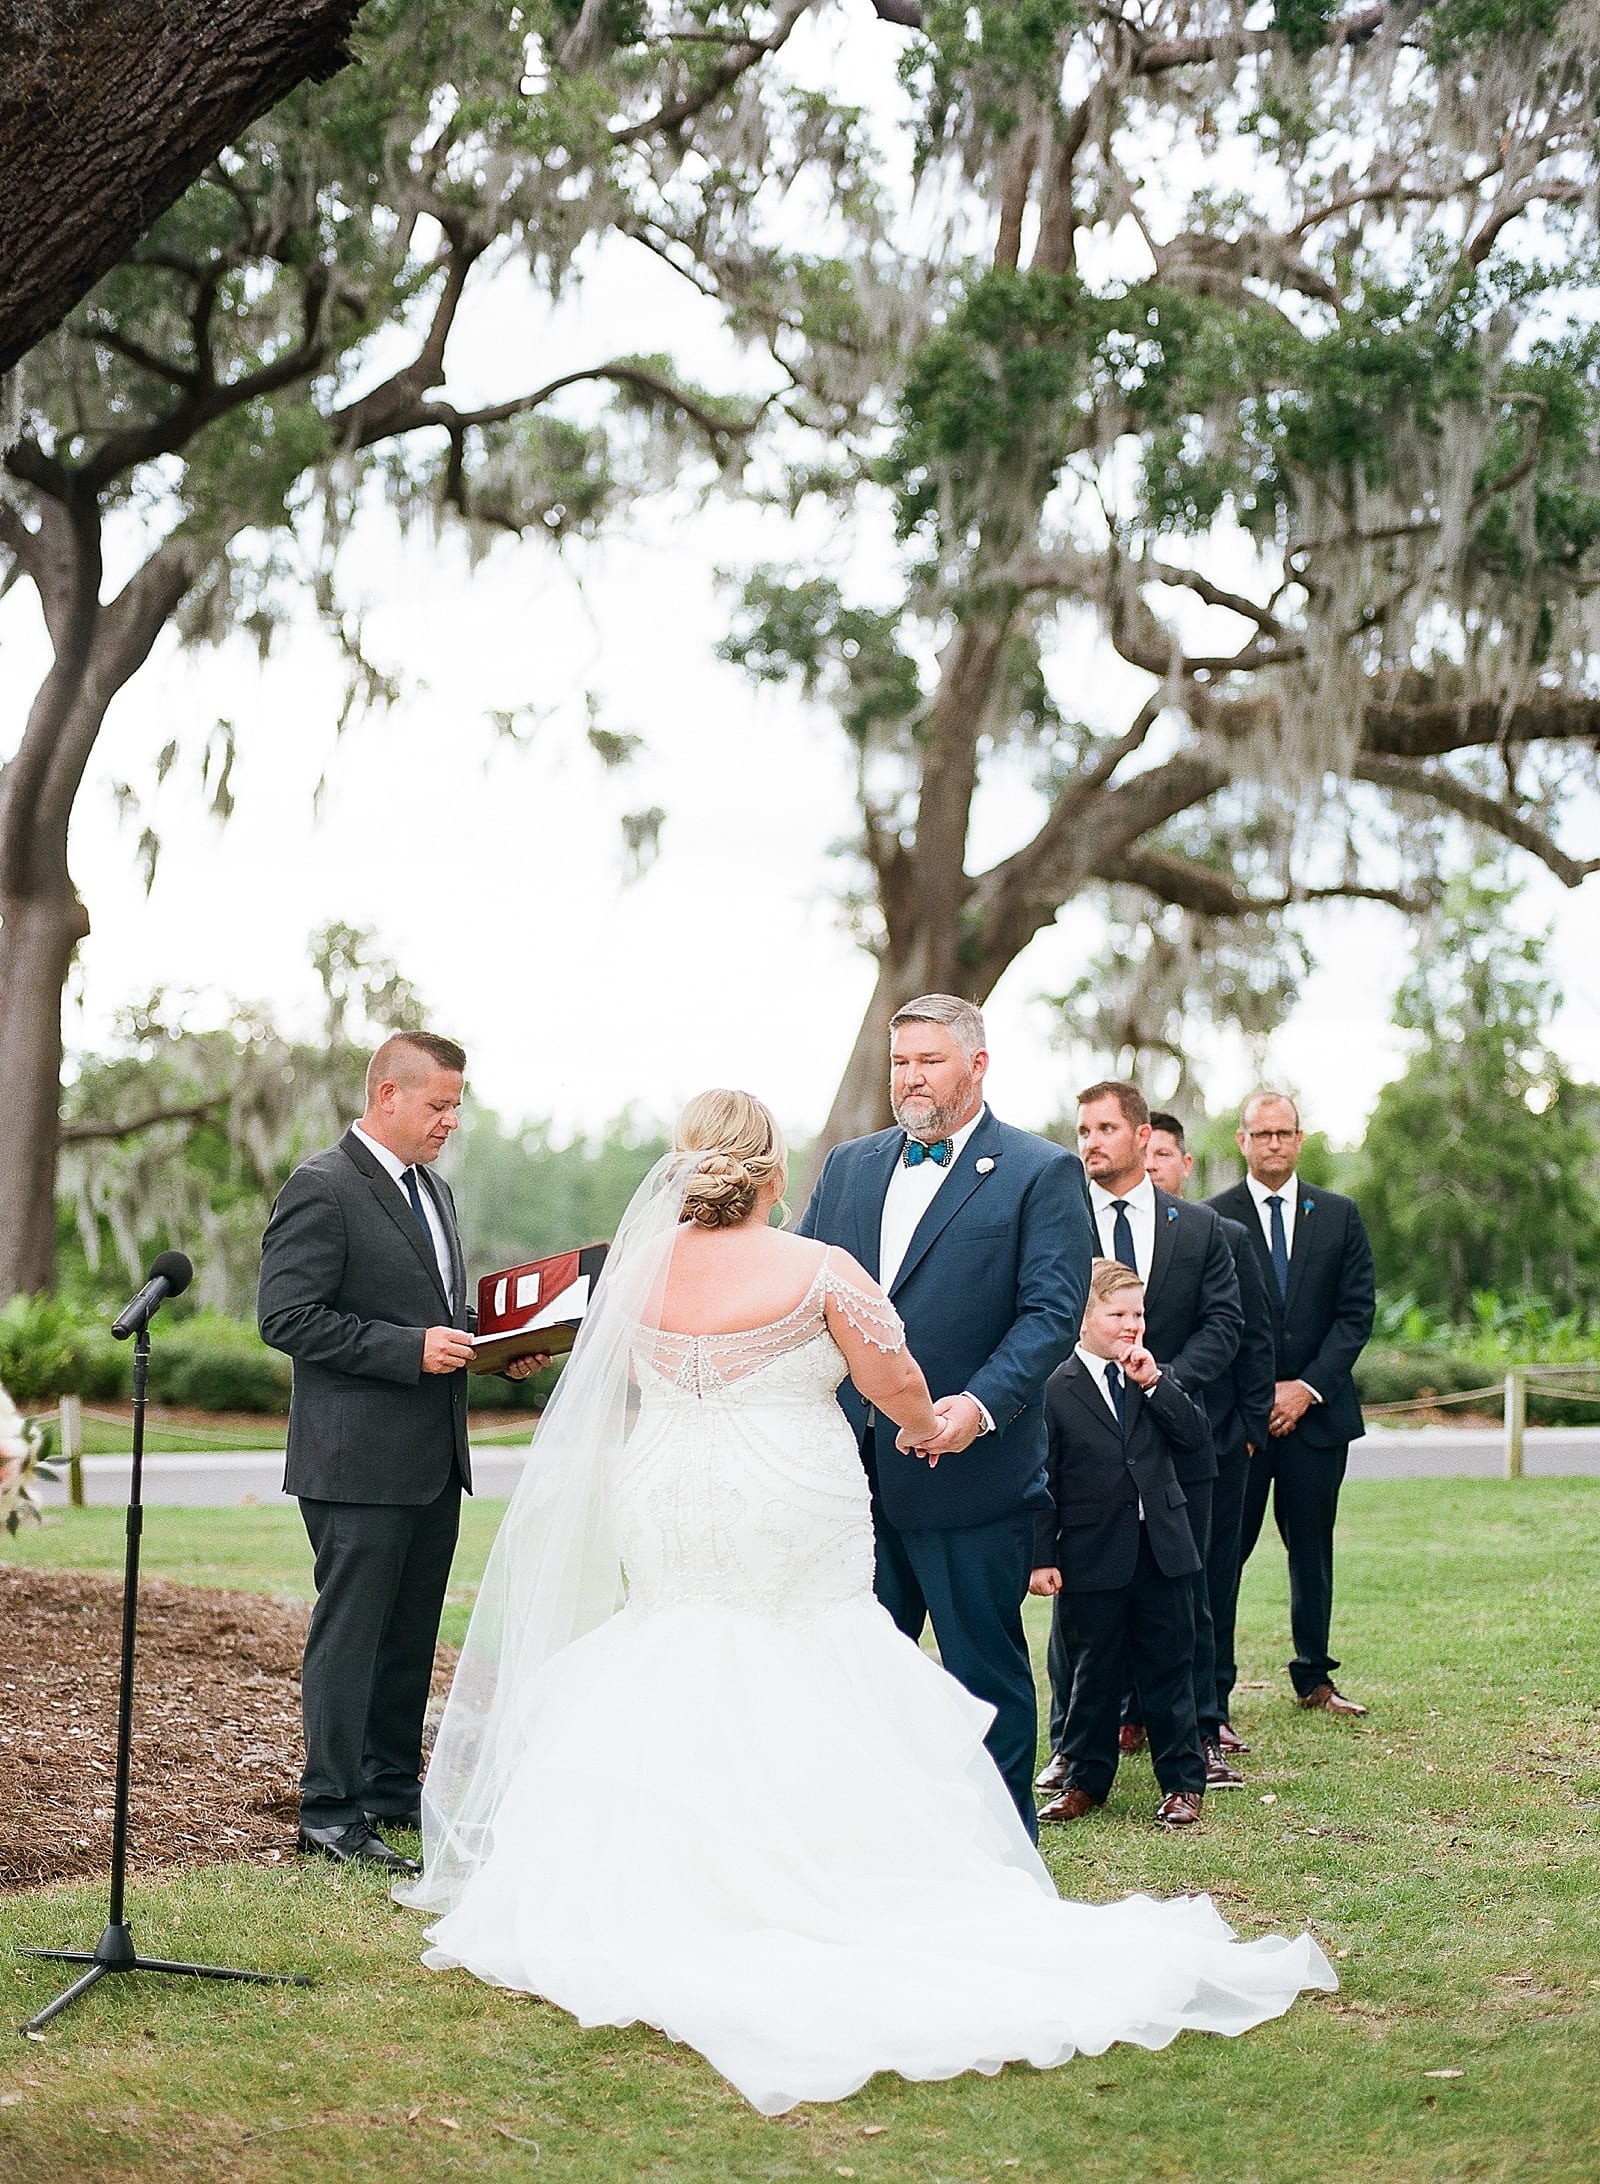 Orlando Wedding Photographer Bride and Groom Ceremony at Oak Tree Photo